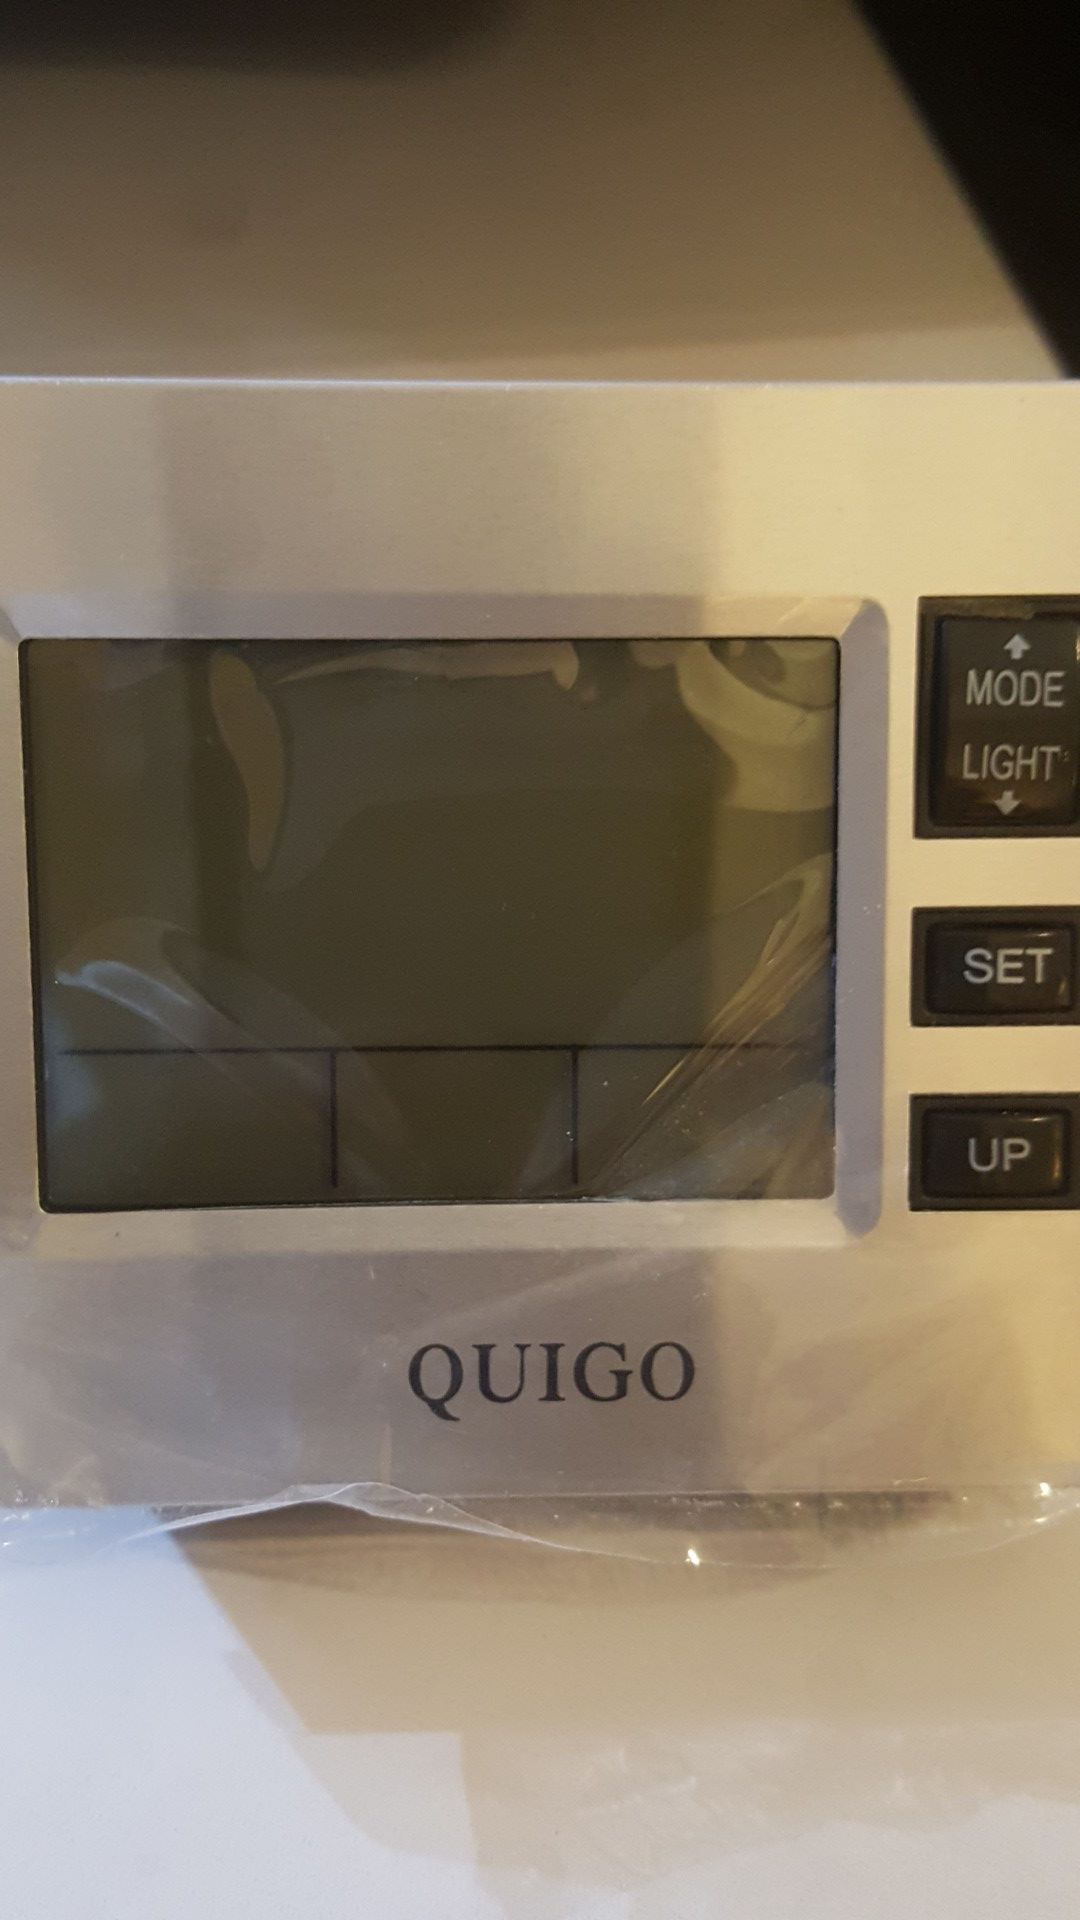 Quigo Small Digital Travel Alarm Clock with Date,Temperature,Snooze,Nightlight